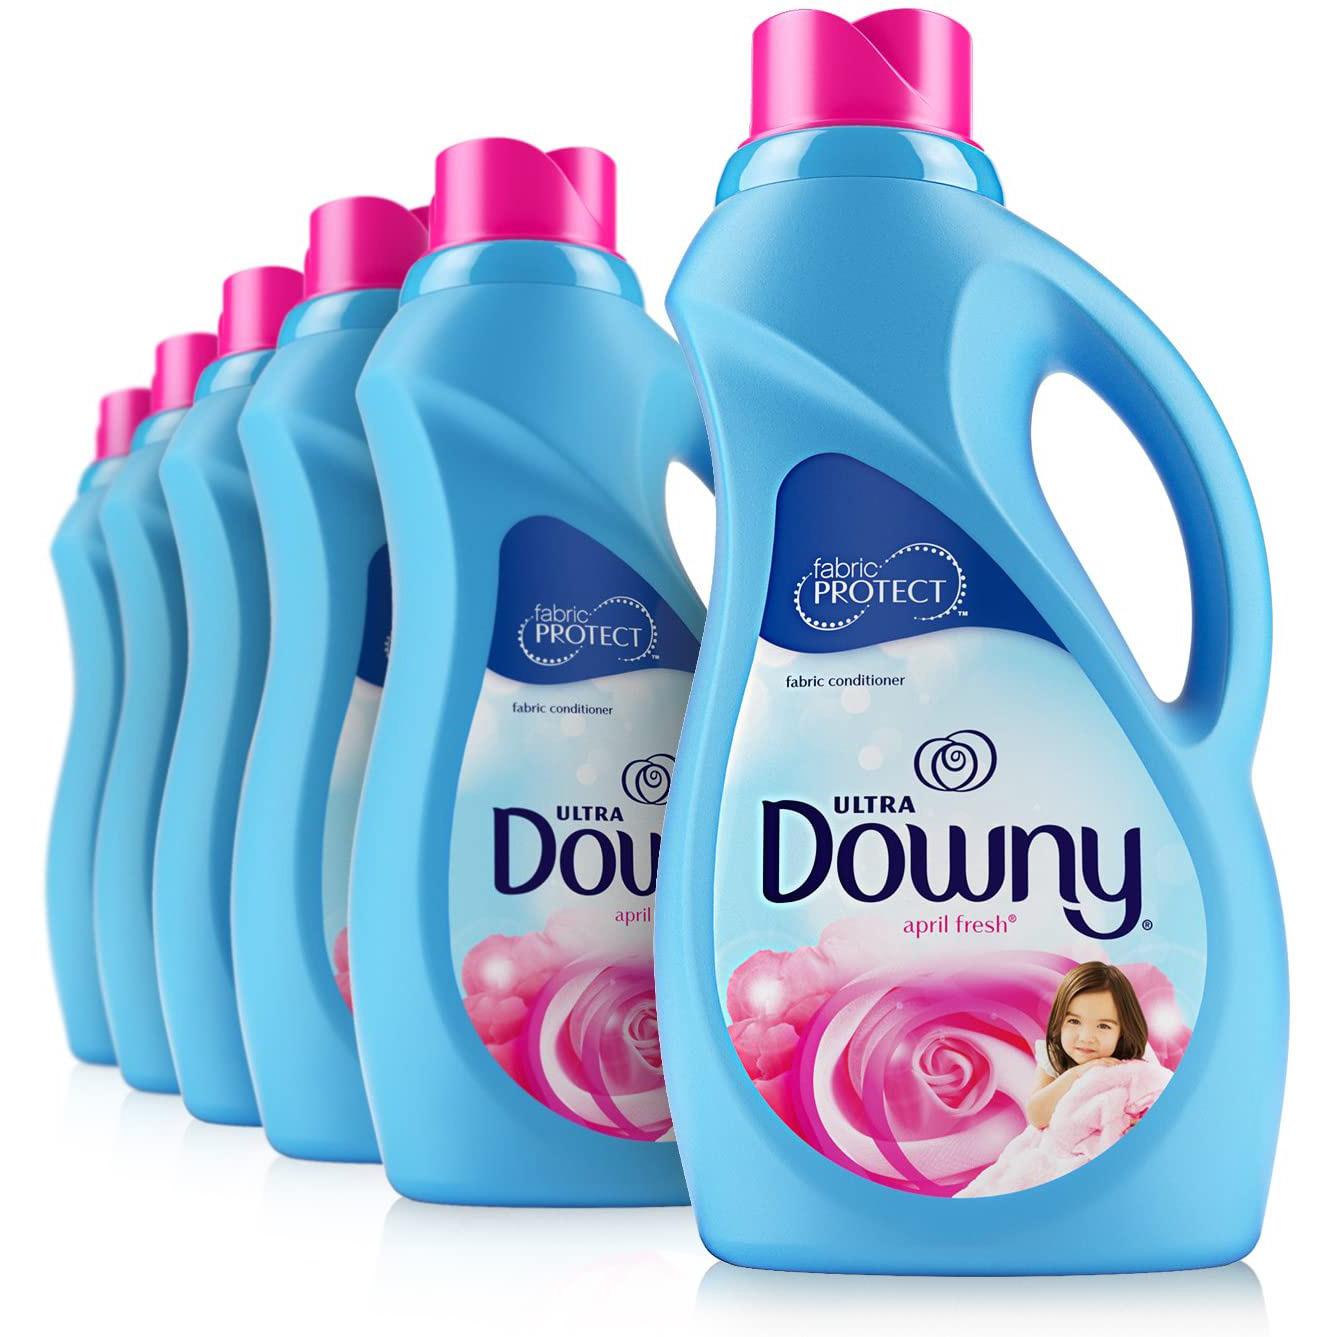 6 Downy Ultra April Fresh Liquid Fabric Softener for $13.04 Shipped